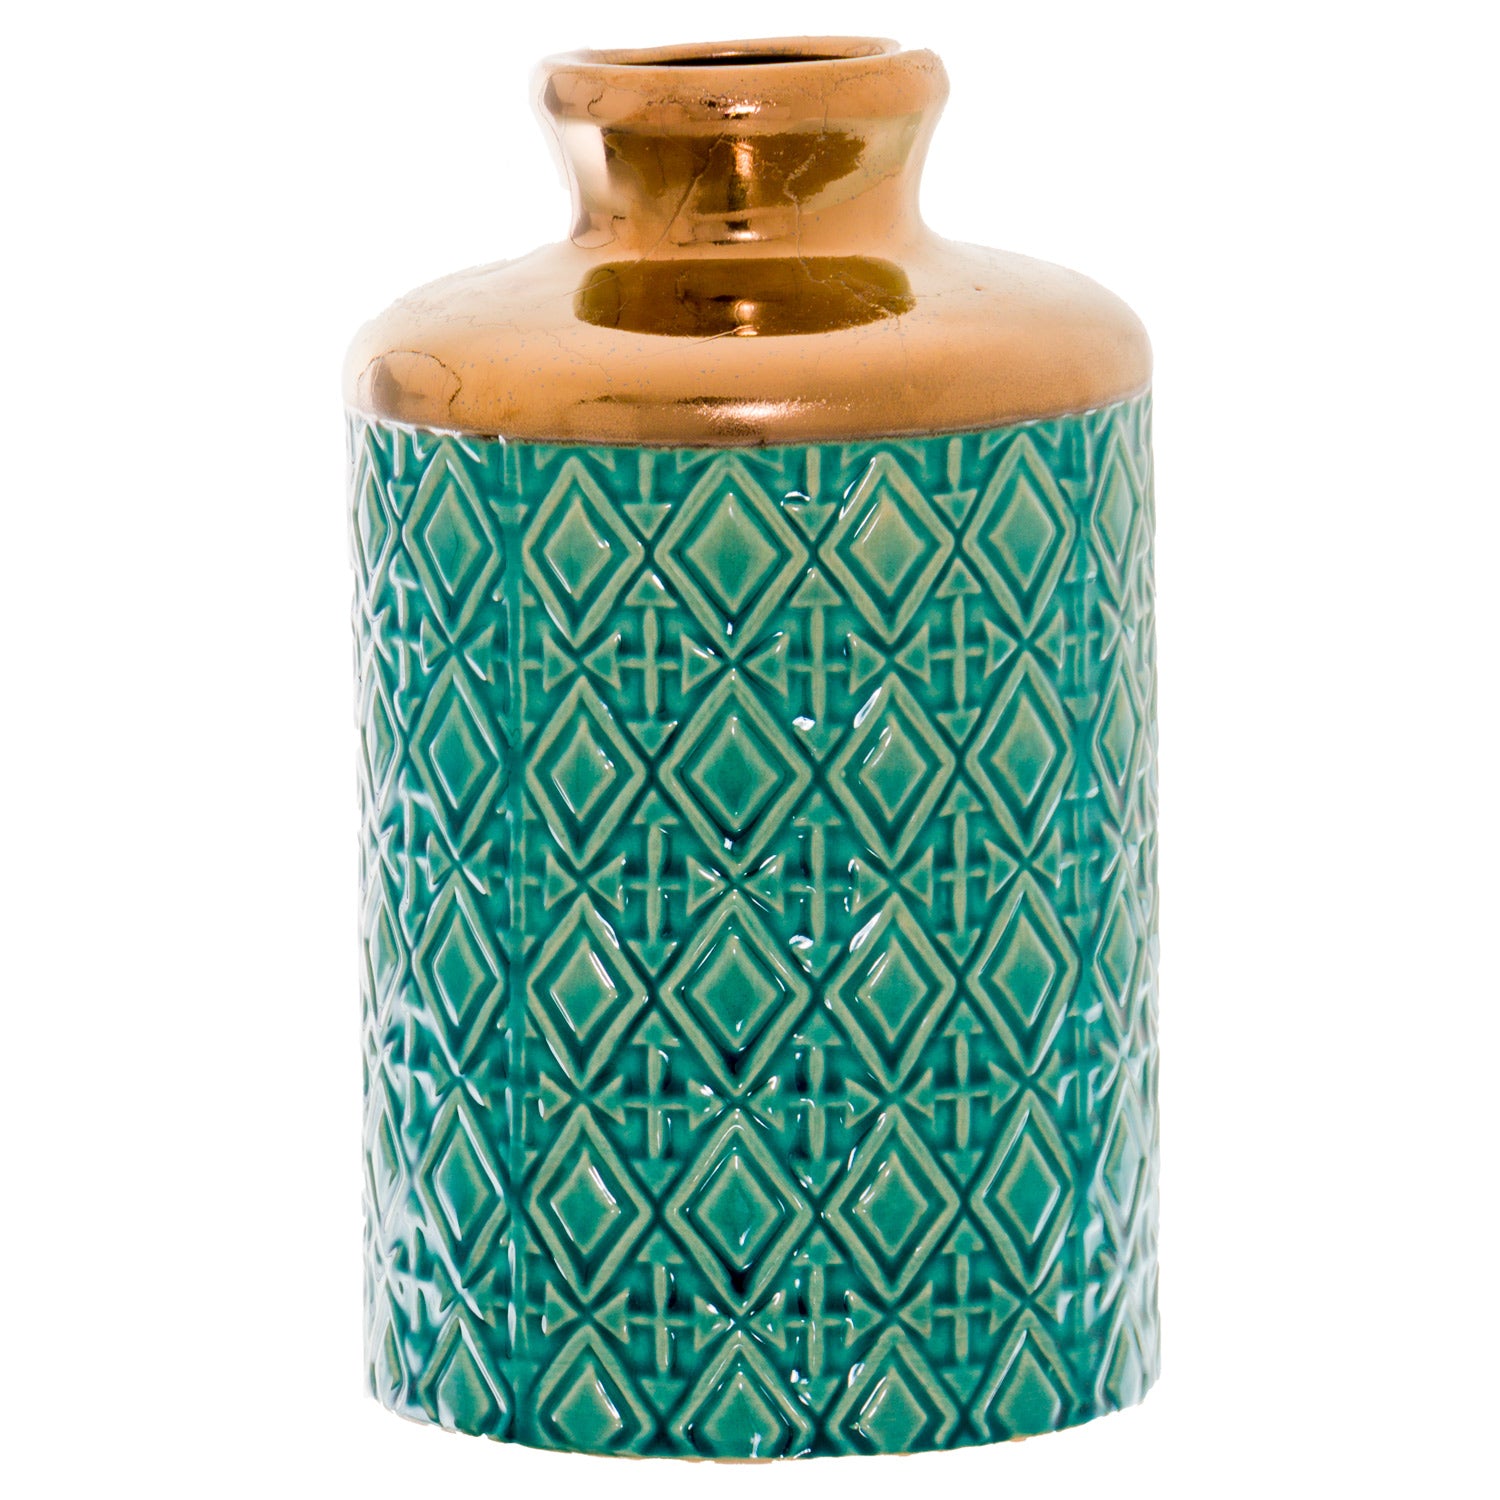 Seville Collection Paragon Bottle Vase